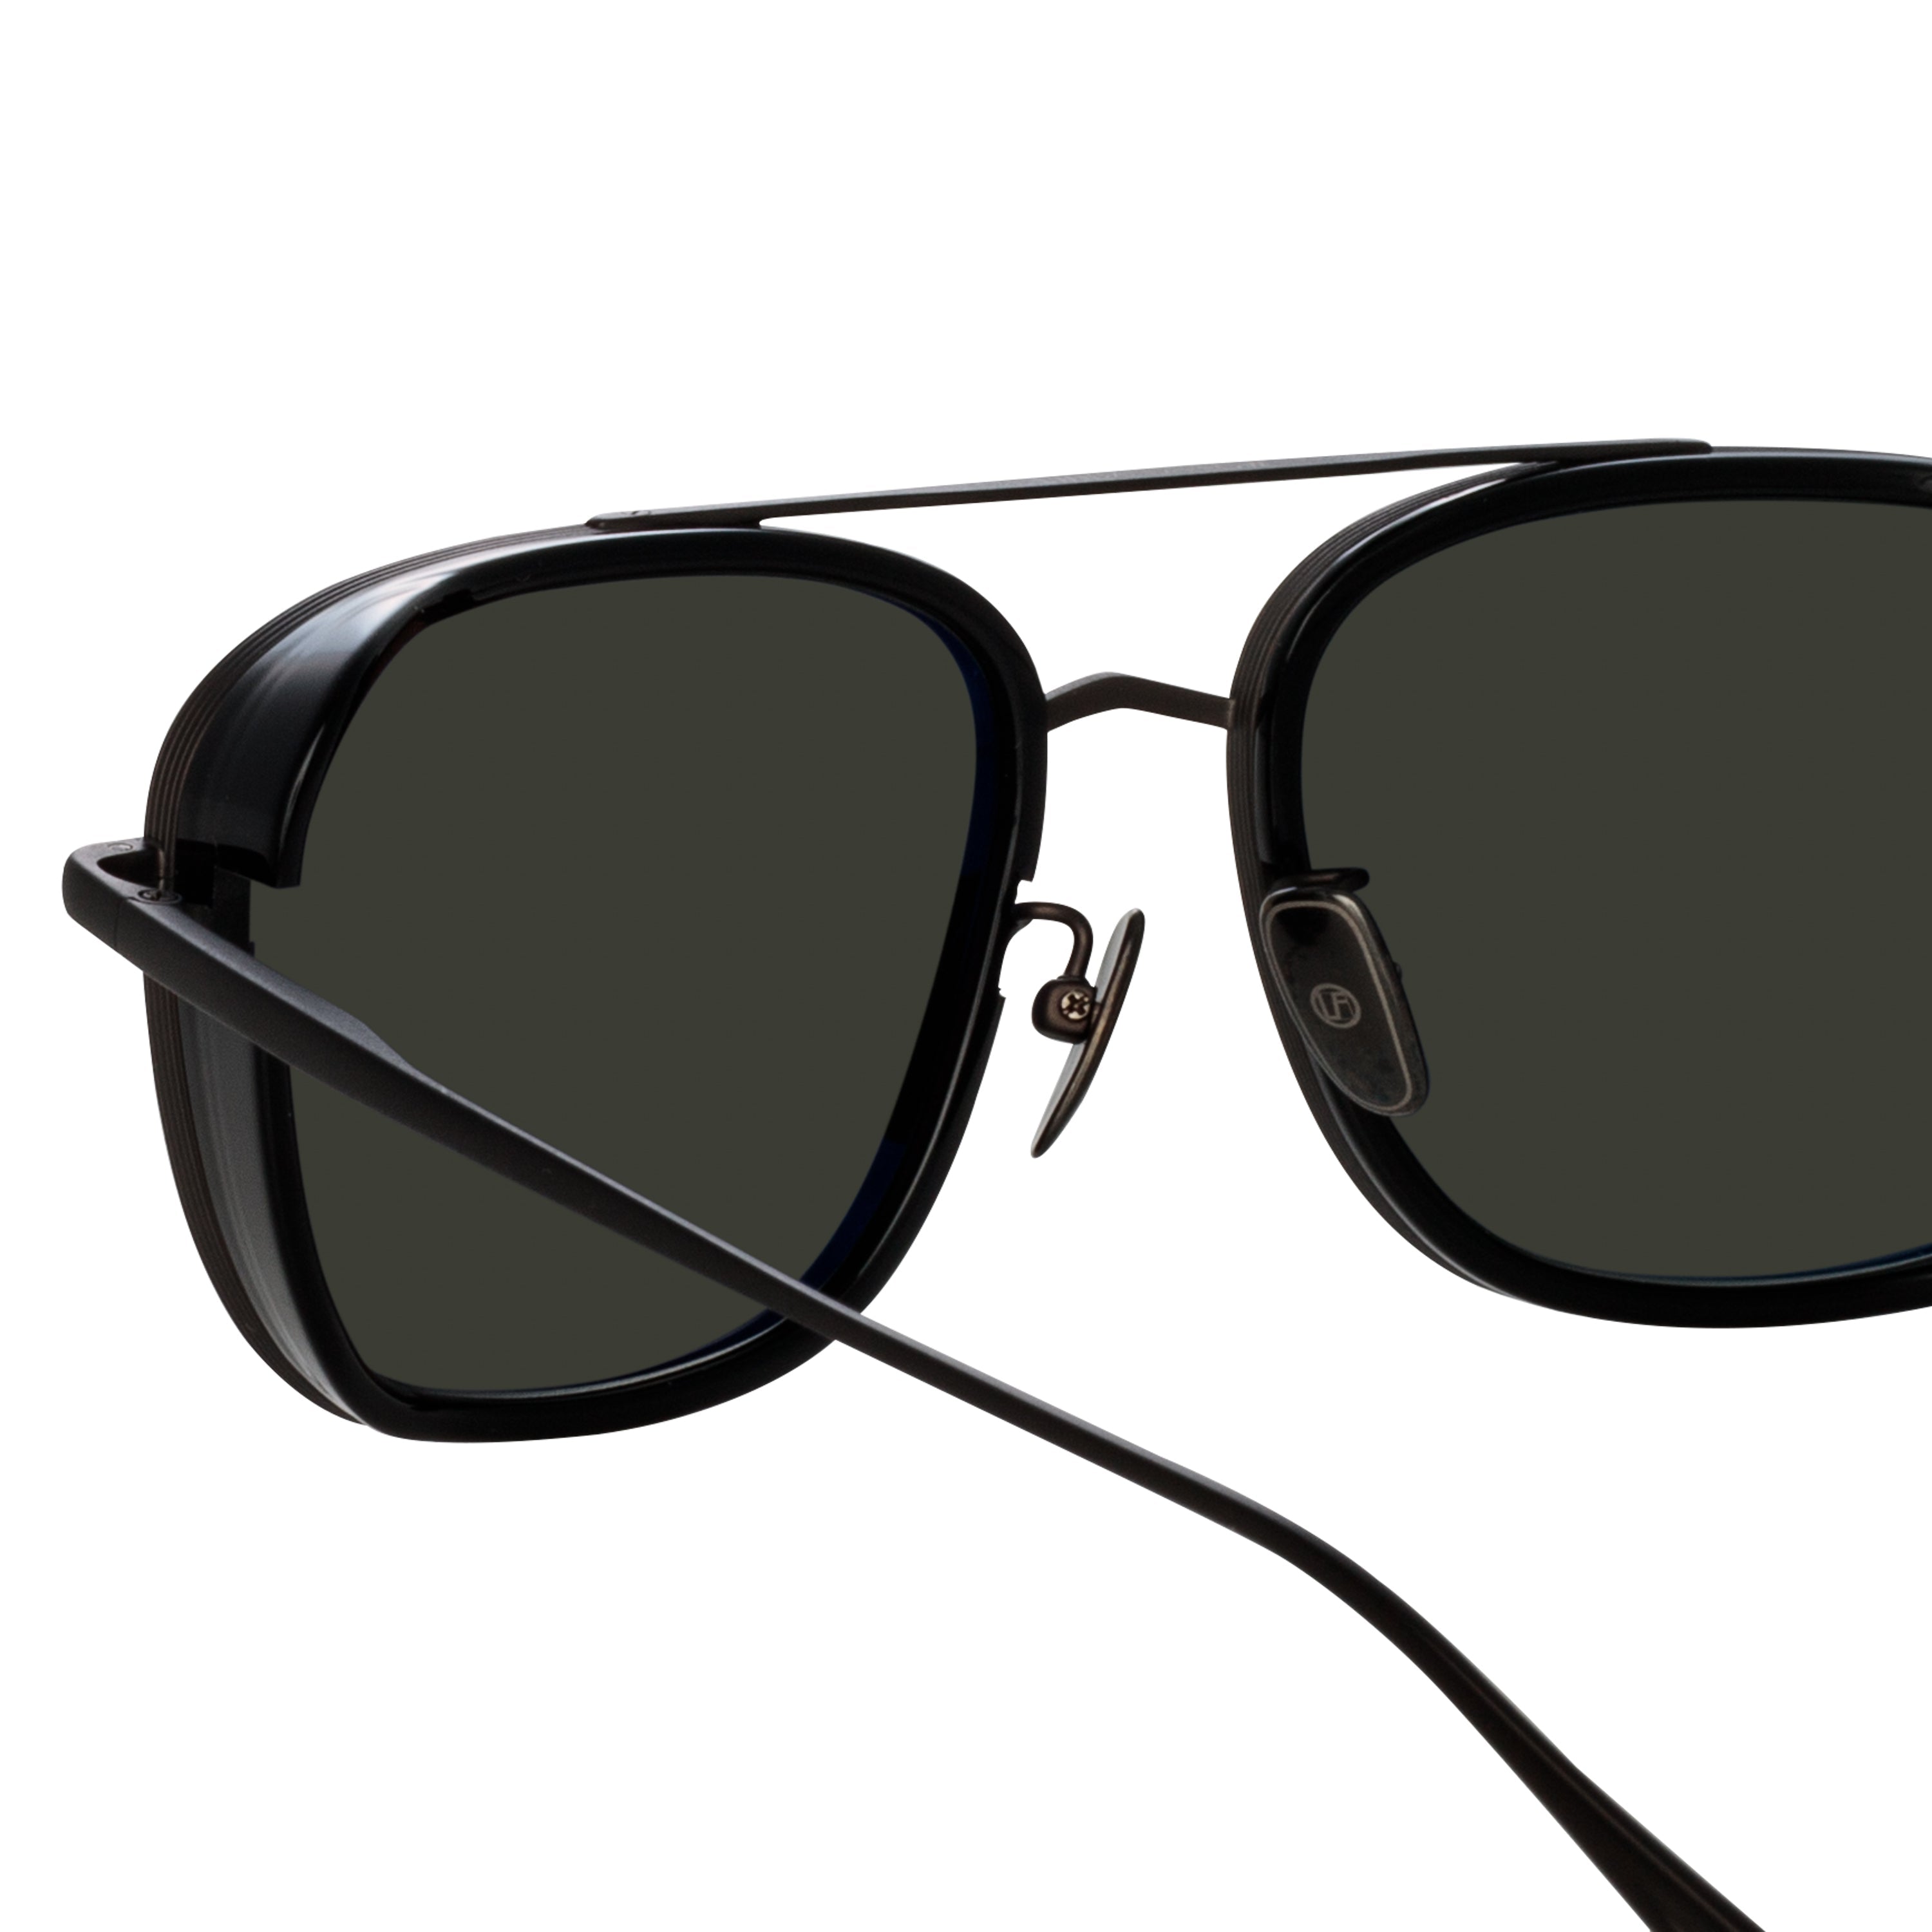 Jarvis Aviator Sunglasses in Black and Nickel by LINDA FARROW 